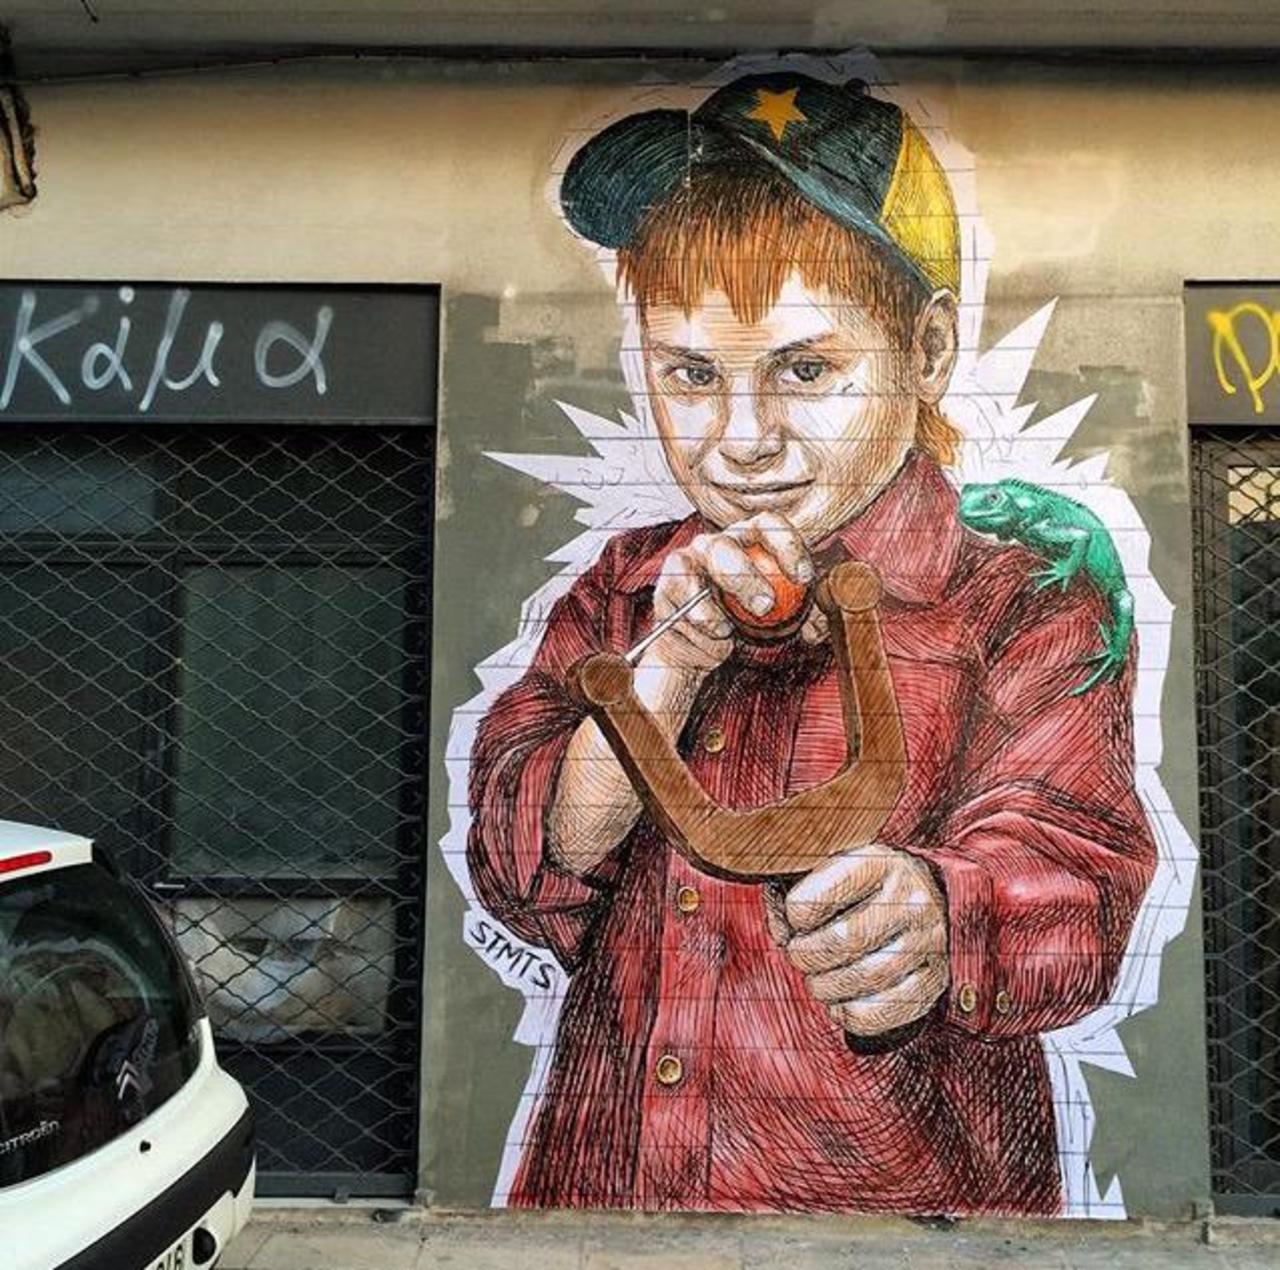 Street Art by STMTS in Athens

#art #graffiti #mural #streetart http://t.co/kMR6hr4TSx